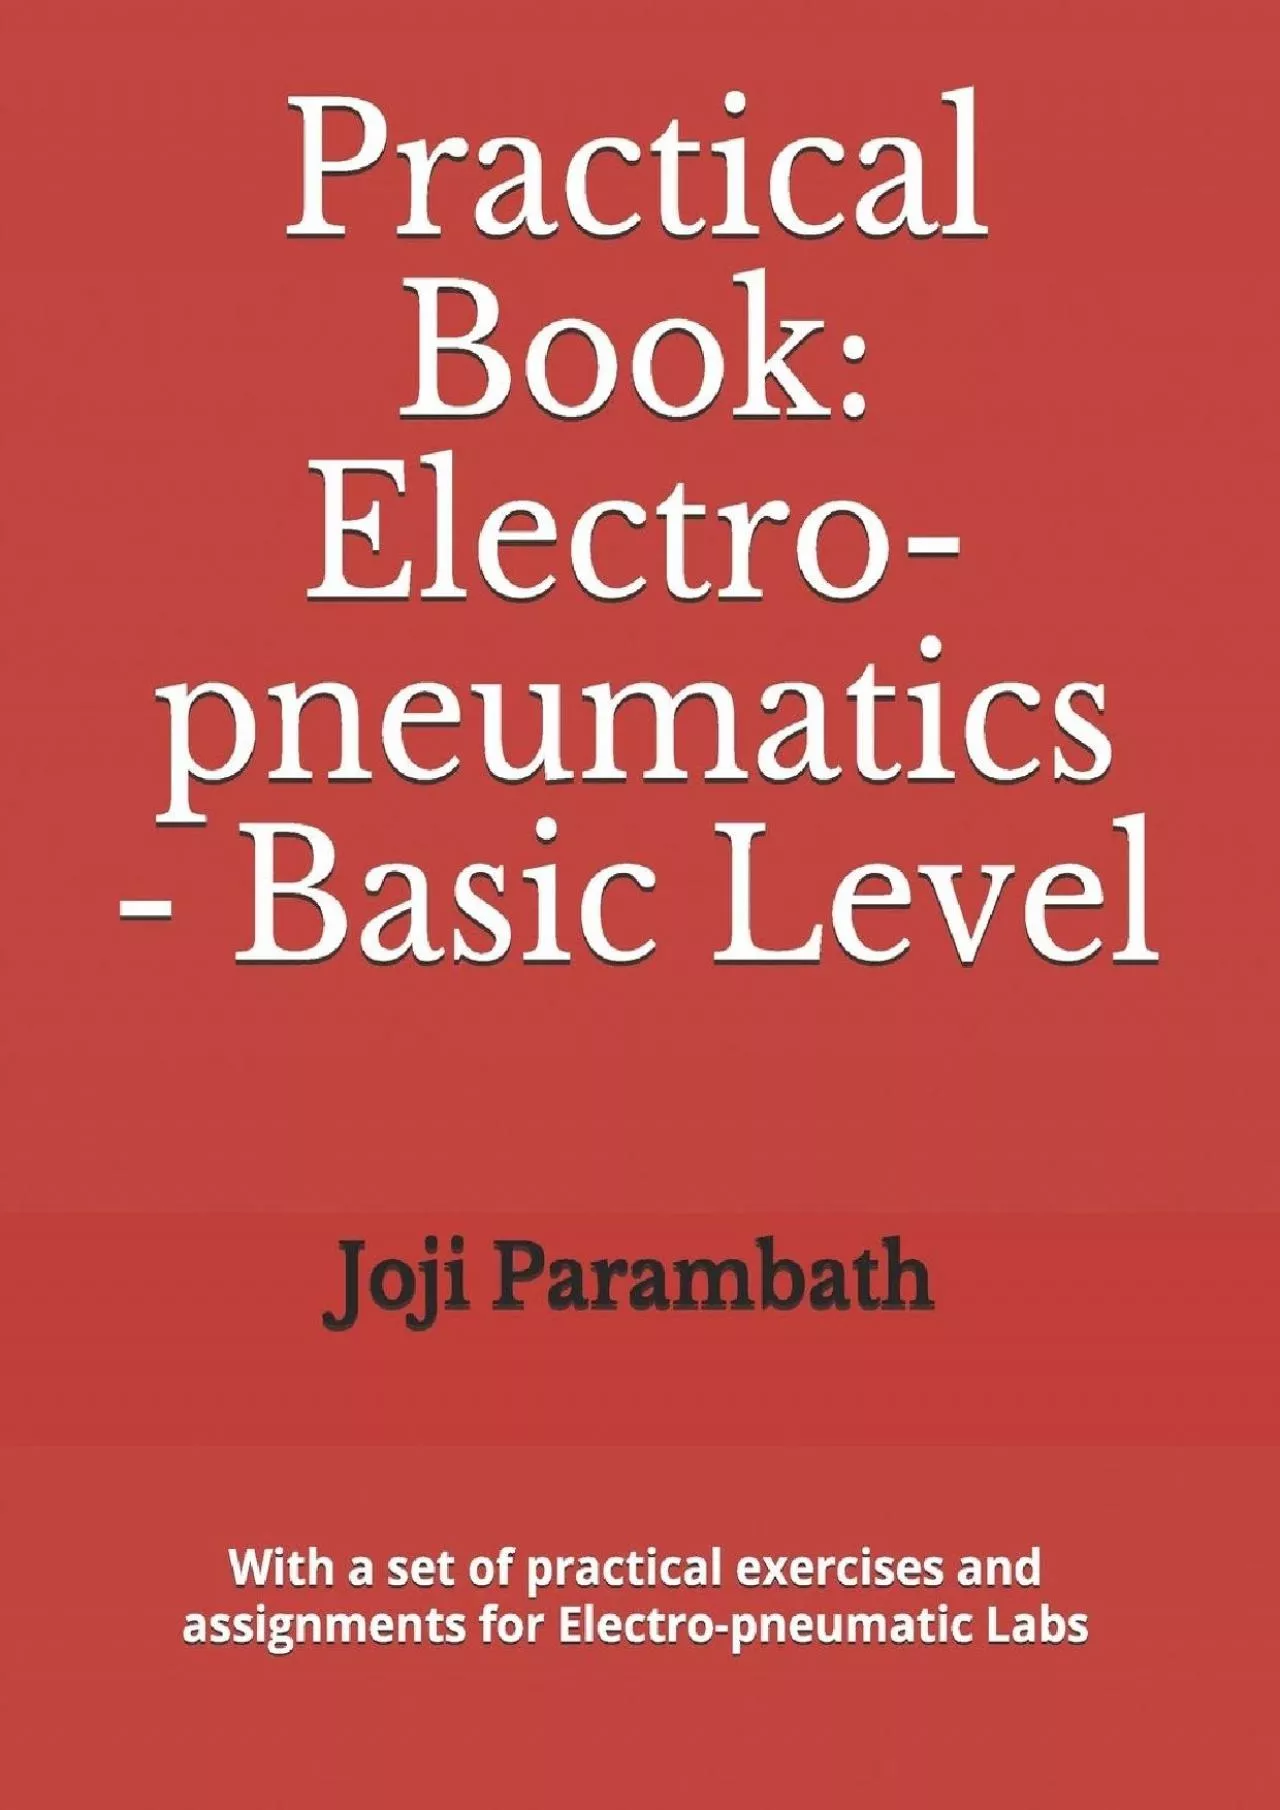 [EBOOK] Practical Book: Electro-pneumatics - Basic Level Industrial Hydraulics and Pneumatics